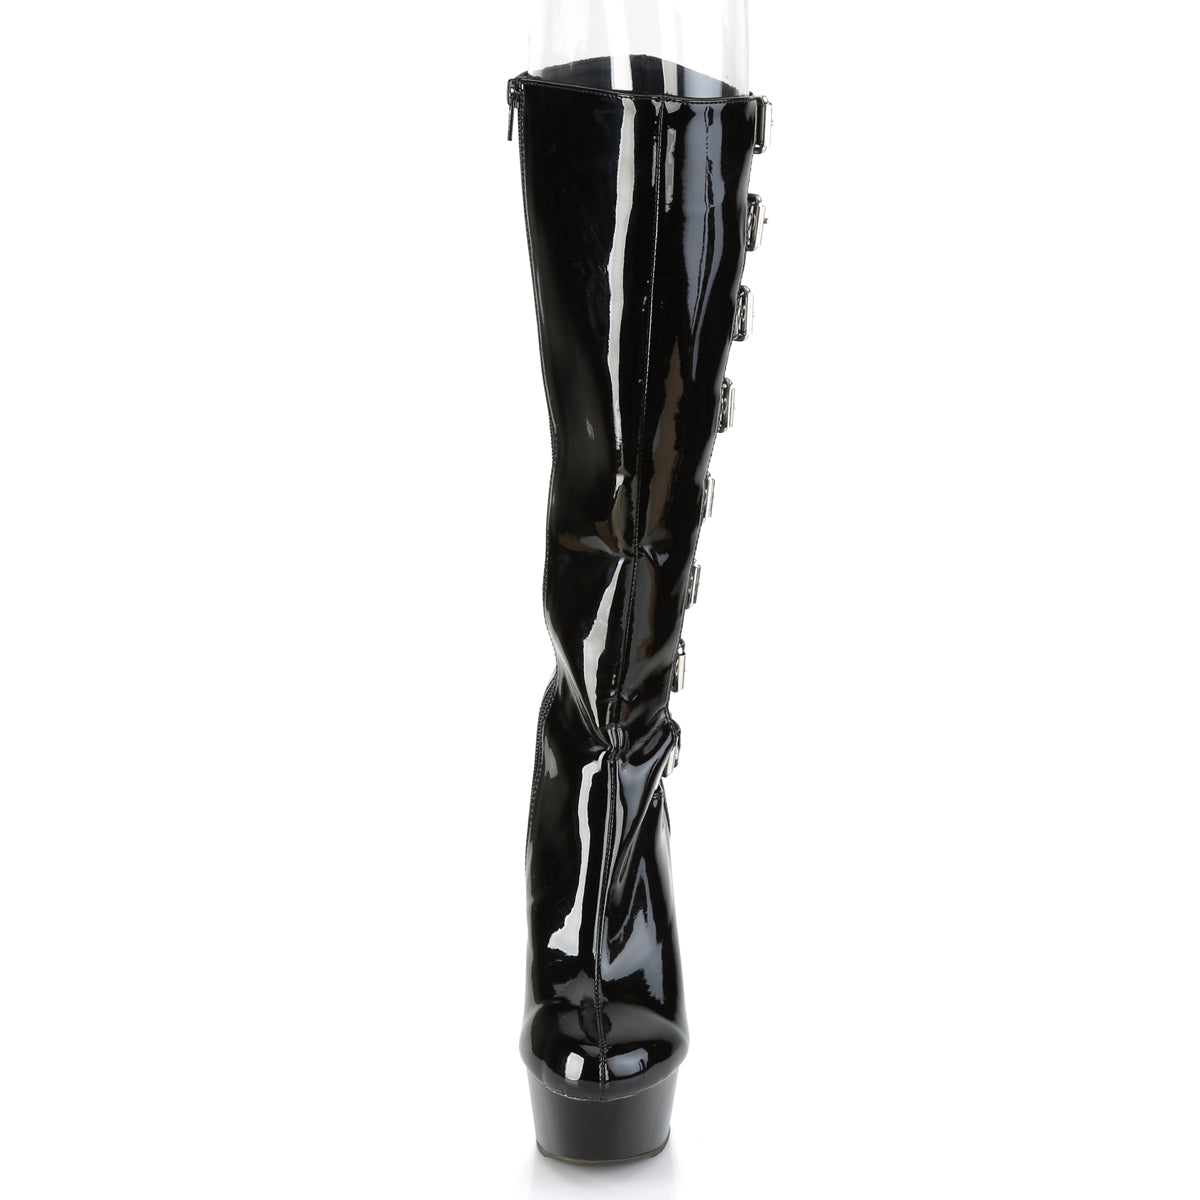 DELIGHT-2047 6 Inch Heel Black Patent Pole Dancing Platforms-Pleaser- Sexy Shoes Alternative Footwear